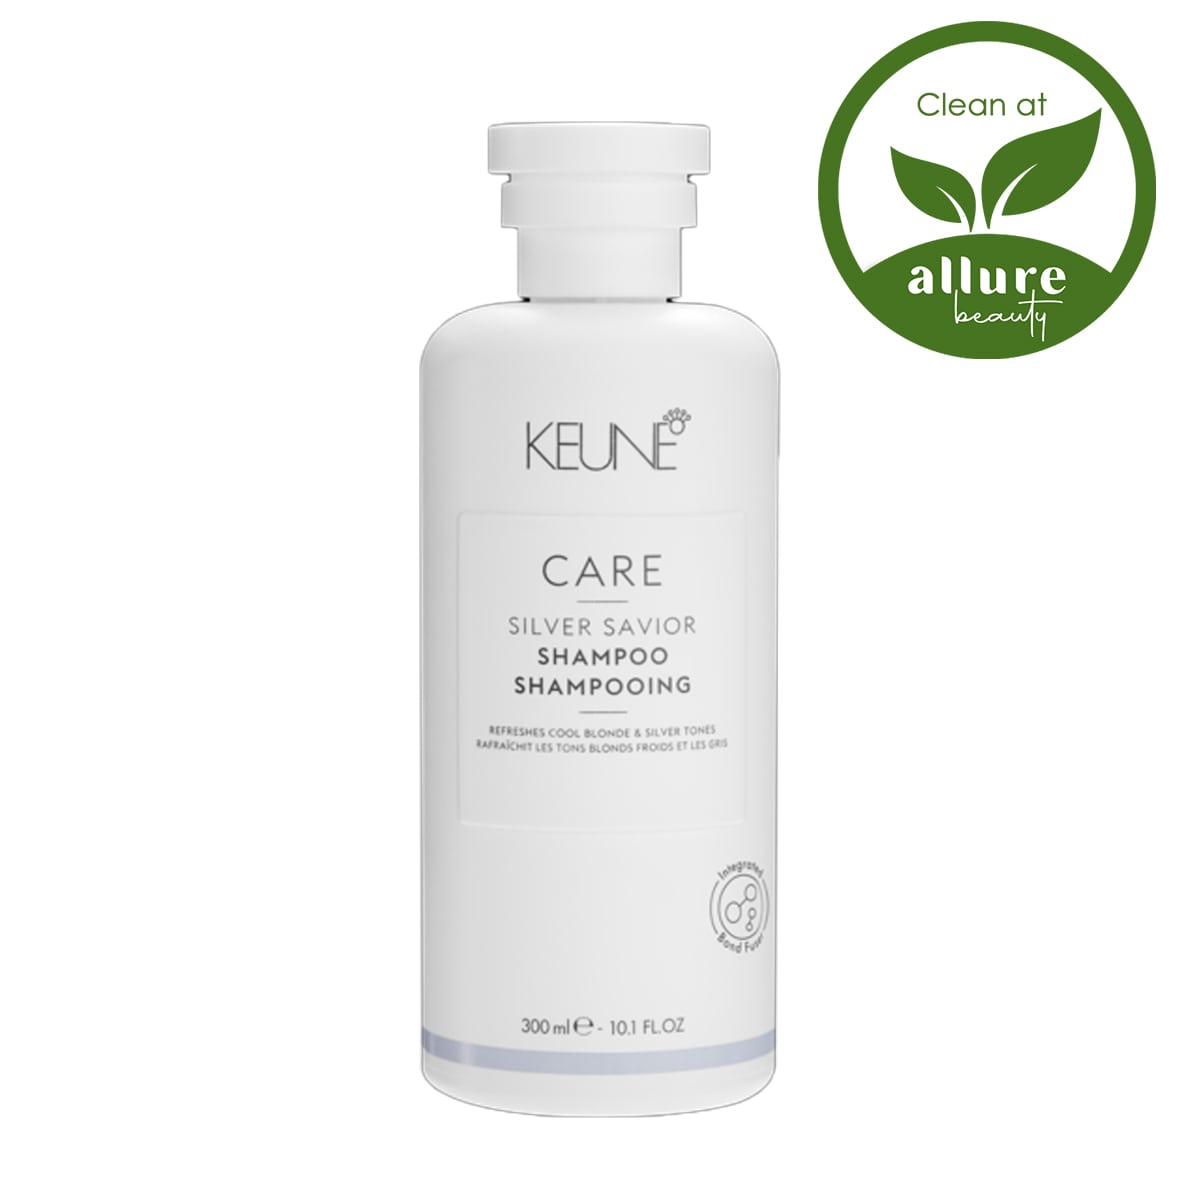 Keune Care Silver Savior Shampoo 300ML - AllurebeautypkKeune Care Silver Savior Shampoo 300ML